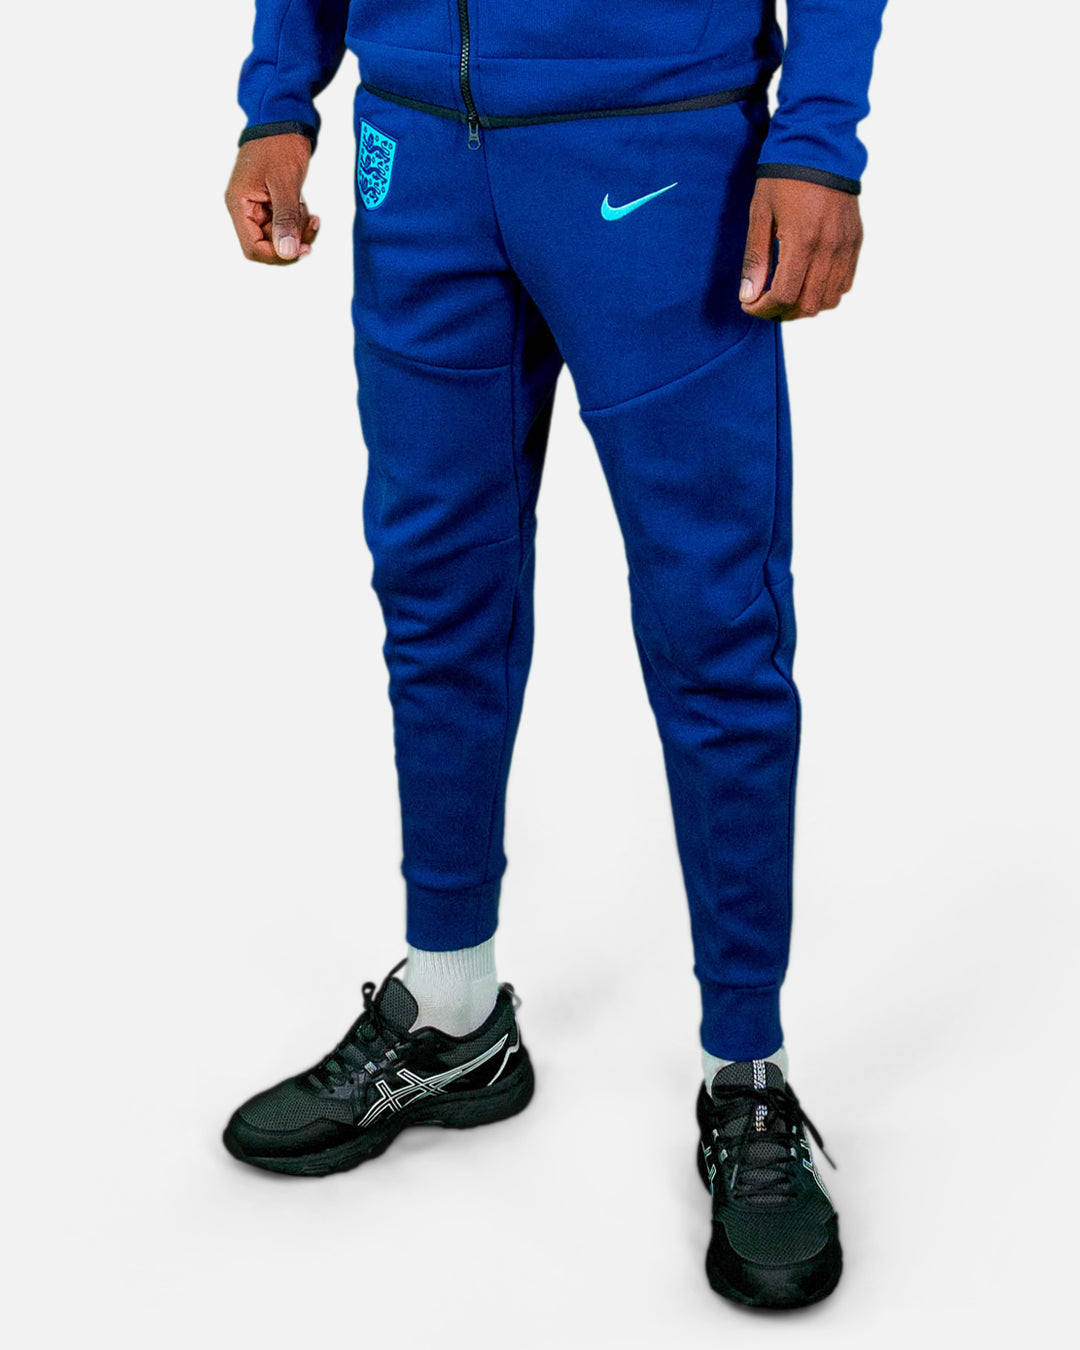 adidas Originals Pantalons de Jogging Blue Version 83-c Homme Bleu